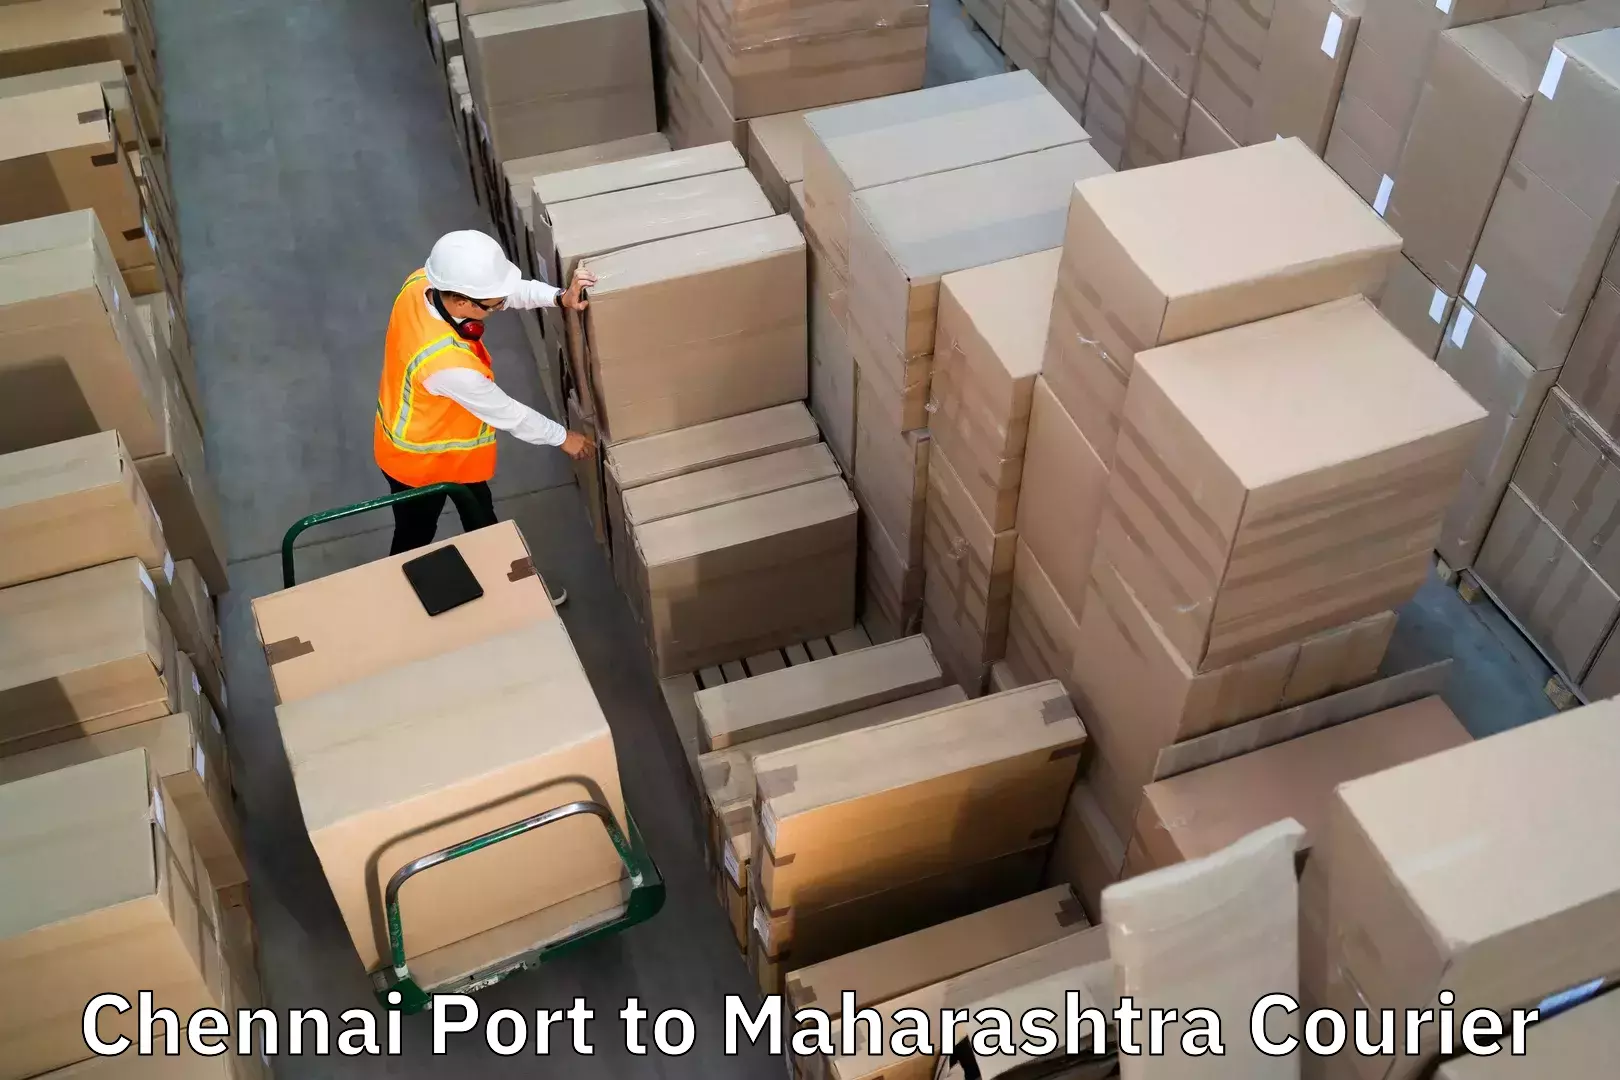 Doorstep luggage collection Chennai Port to Ganpatipule